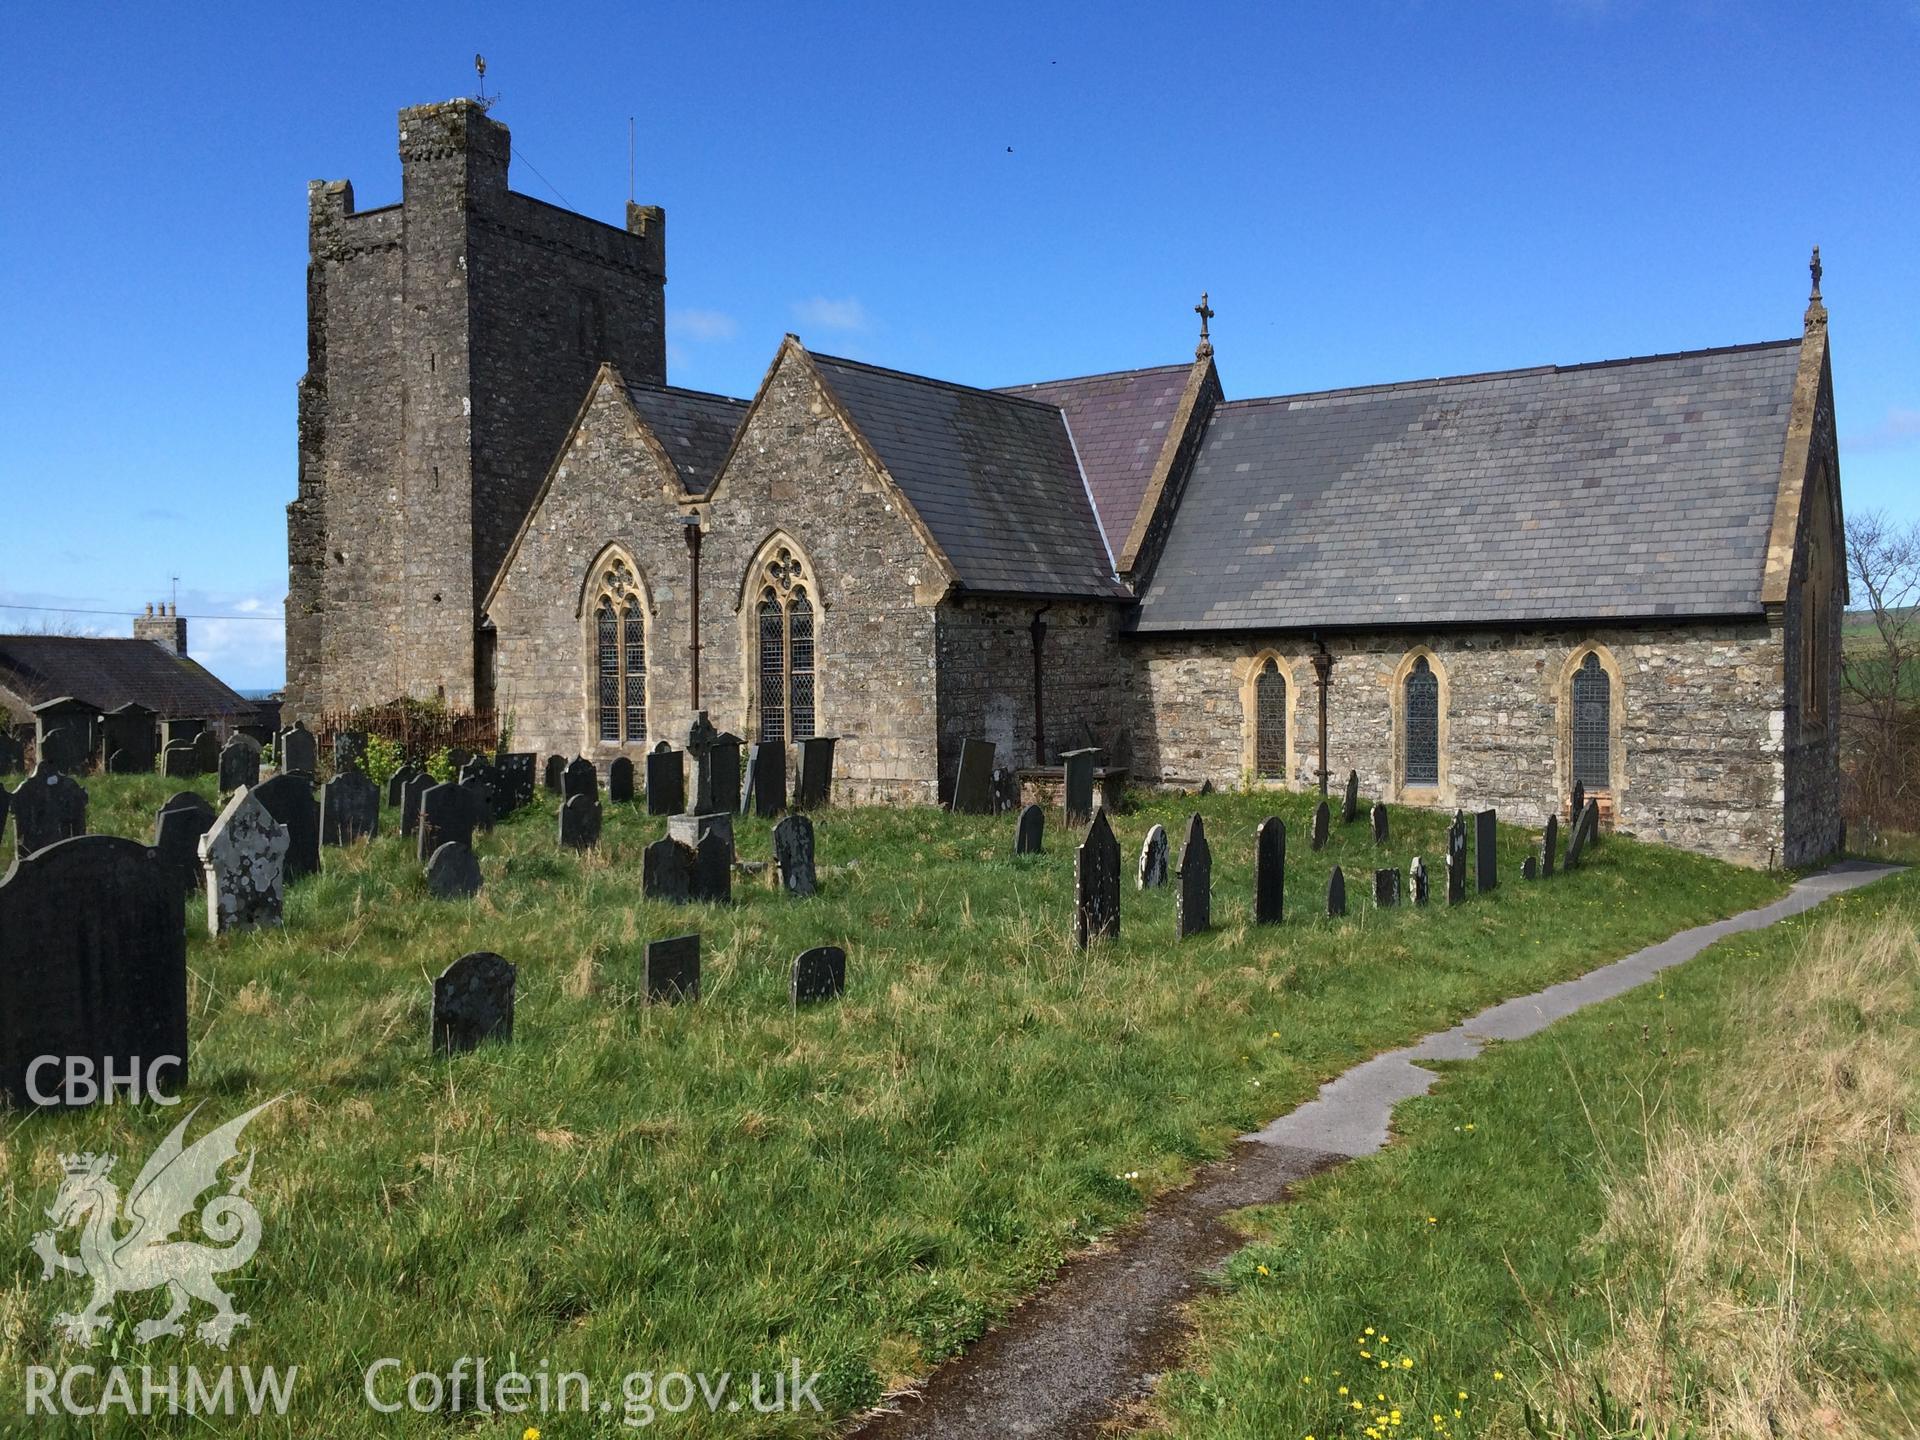 Colour photo showing Newport Church, taken by Paul R. Davis, 16th April 2016.